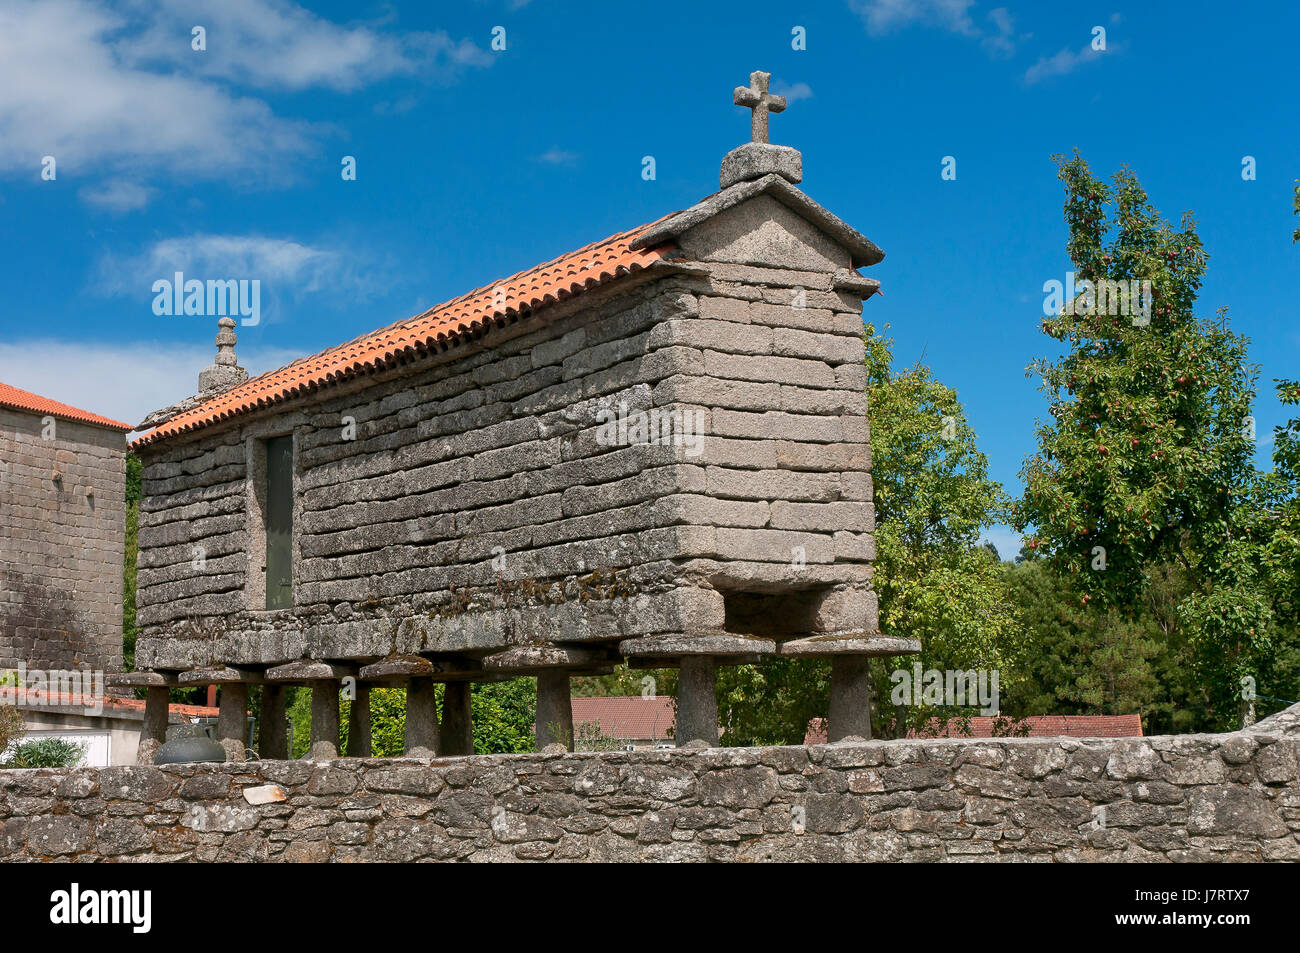 Traditional galician Horreo (granary), Vimianzo, La Coruna province, Region of Galicia, Spain, Europe Stock Photo